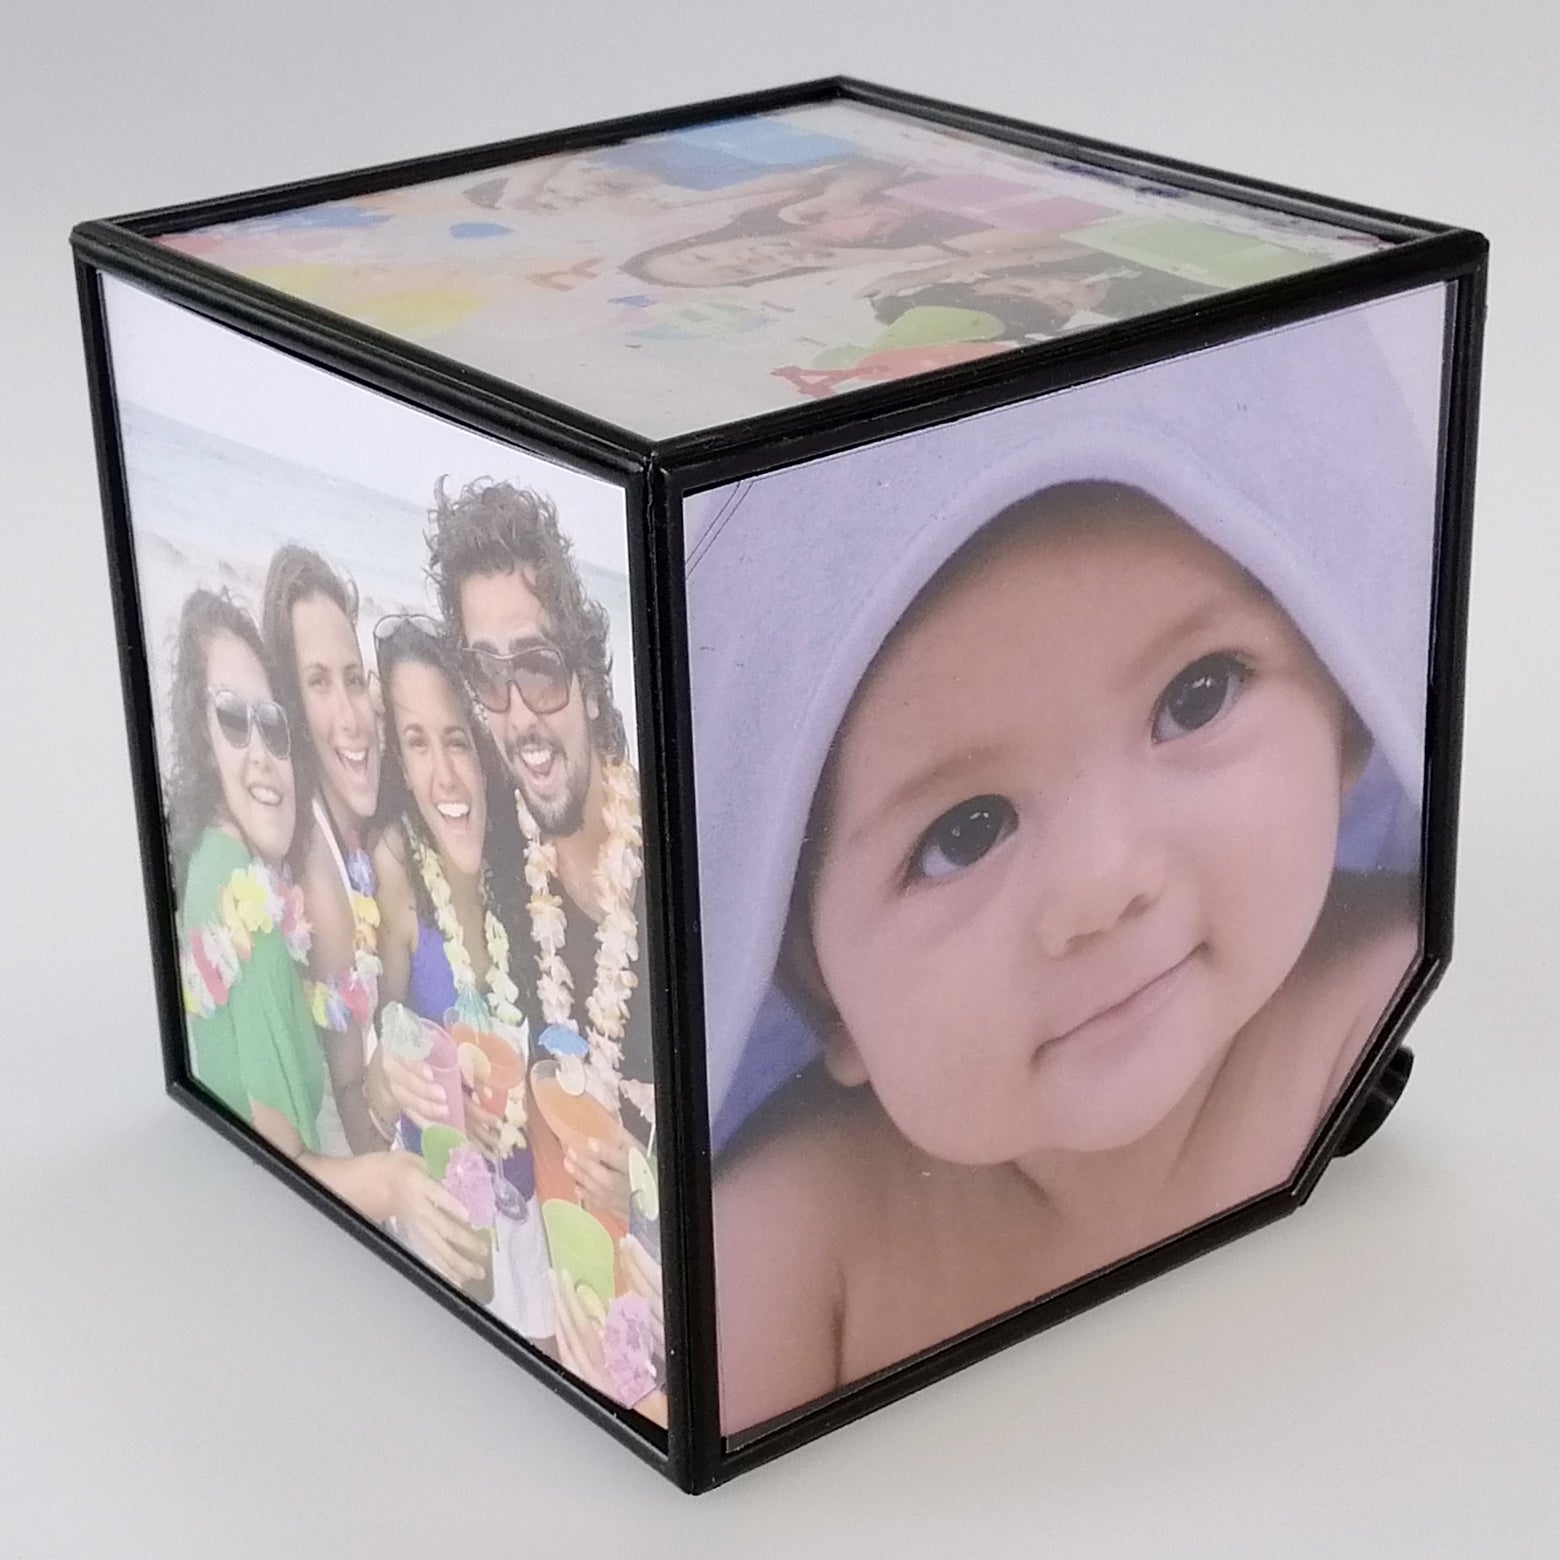 Automatic Rotating Photo-Cube